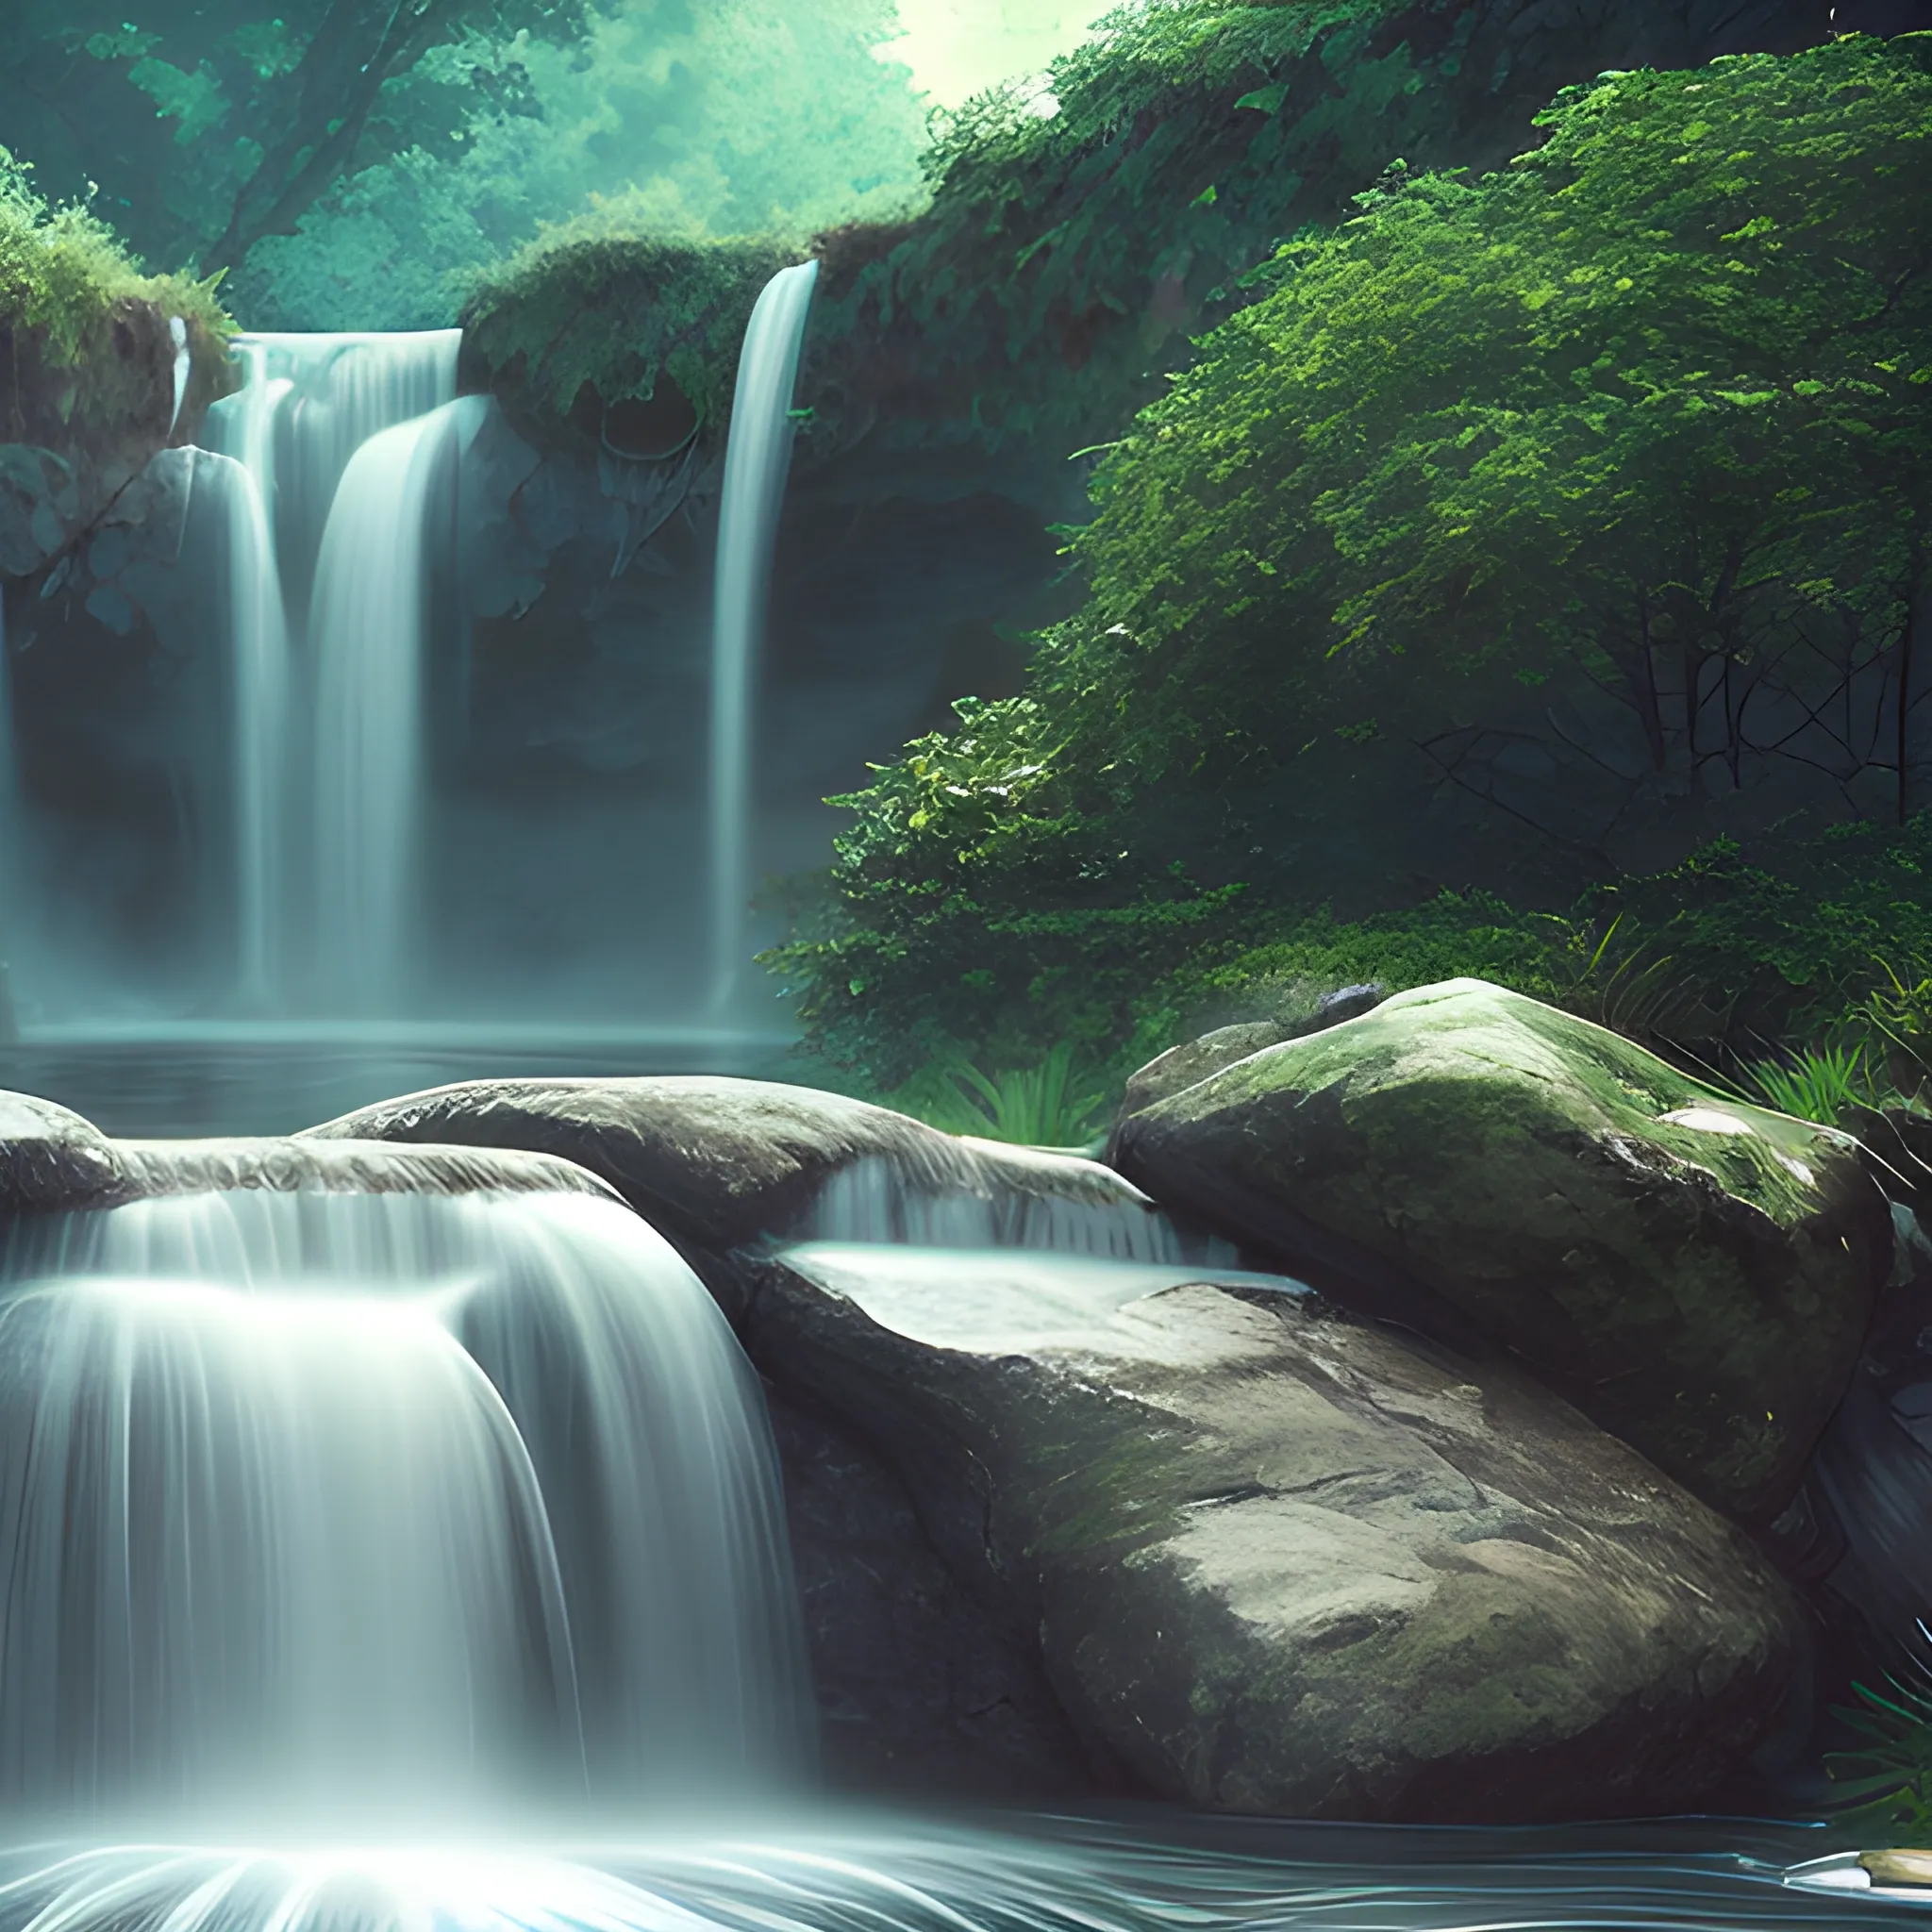 make it river, waterfall background, photorealistic, 4k,
